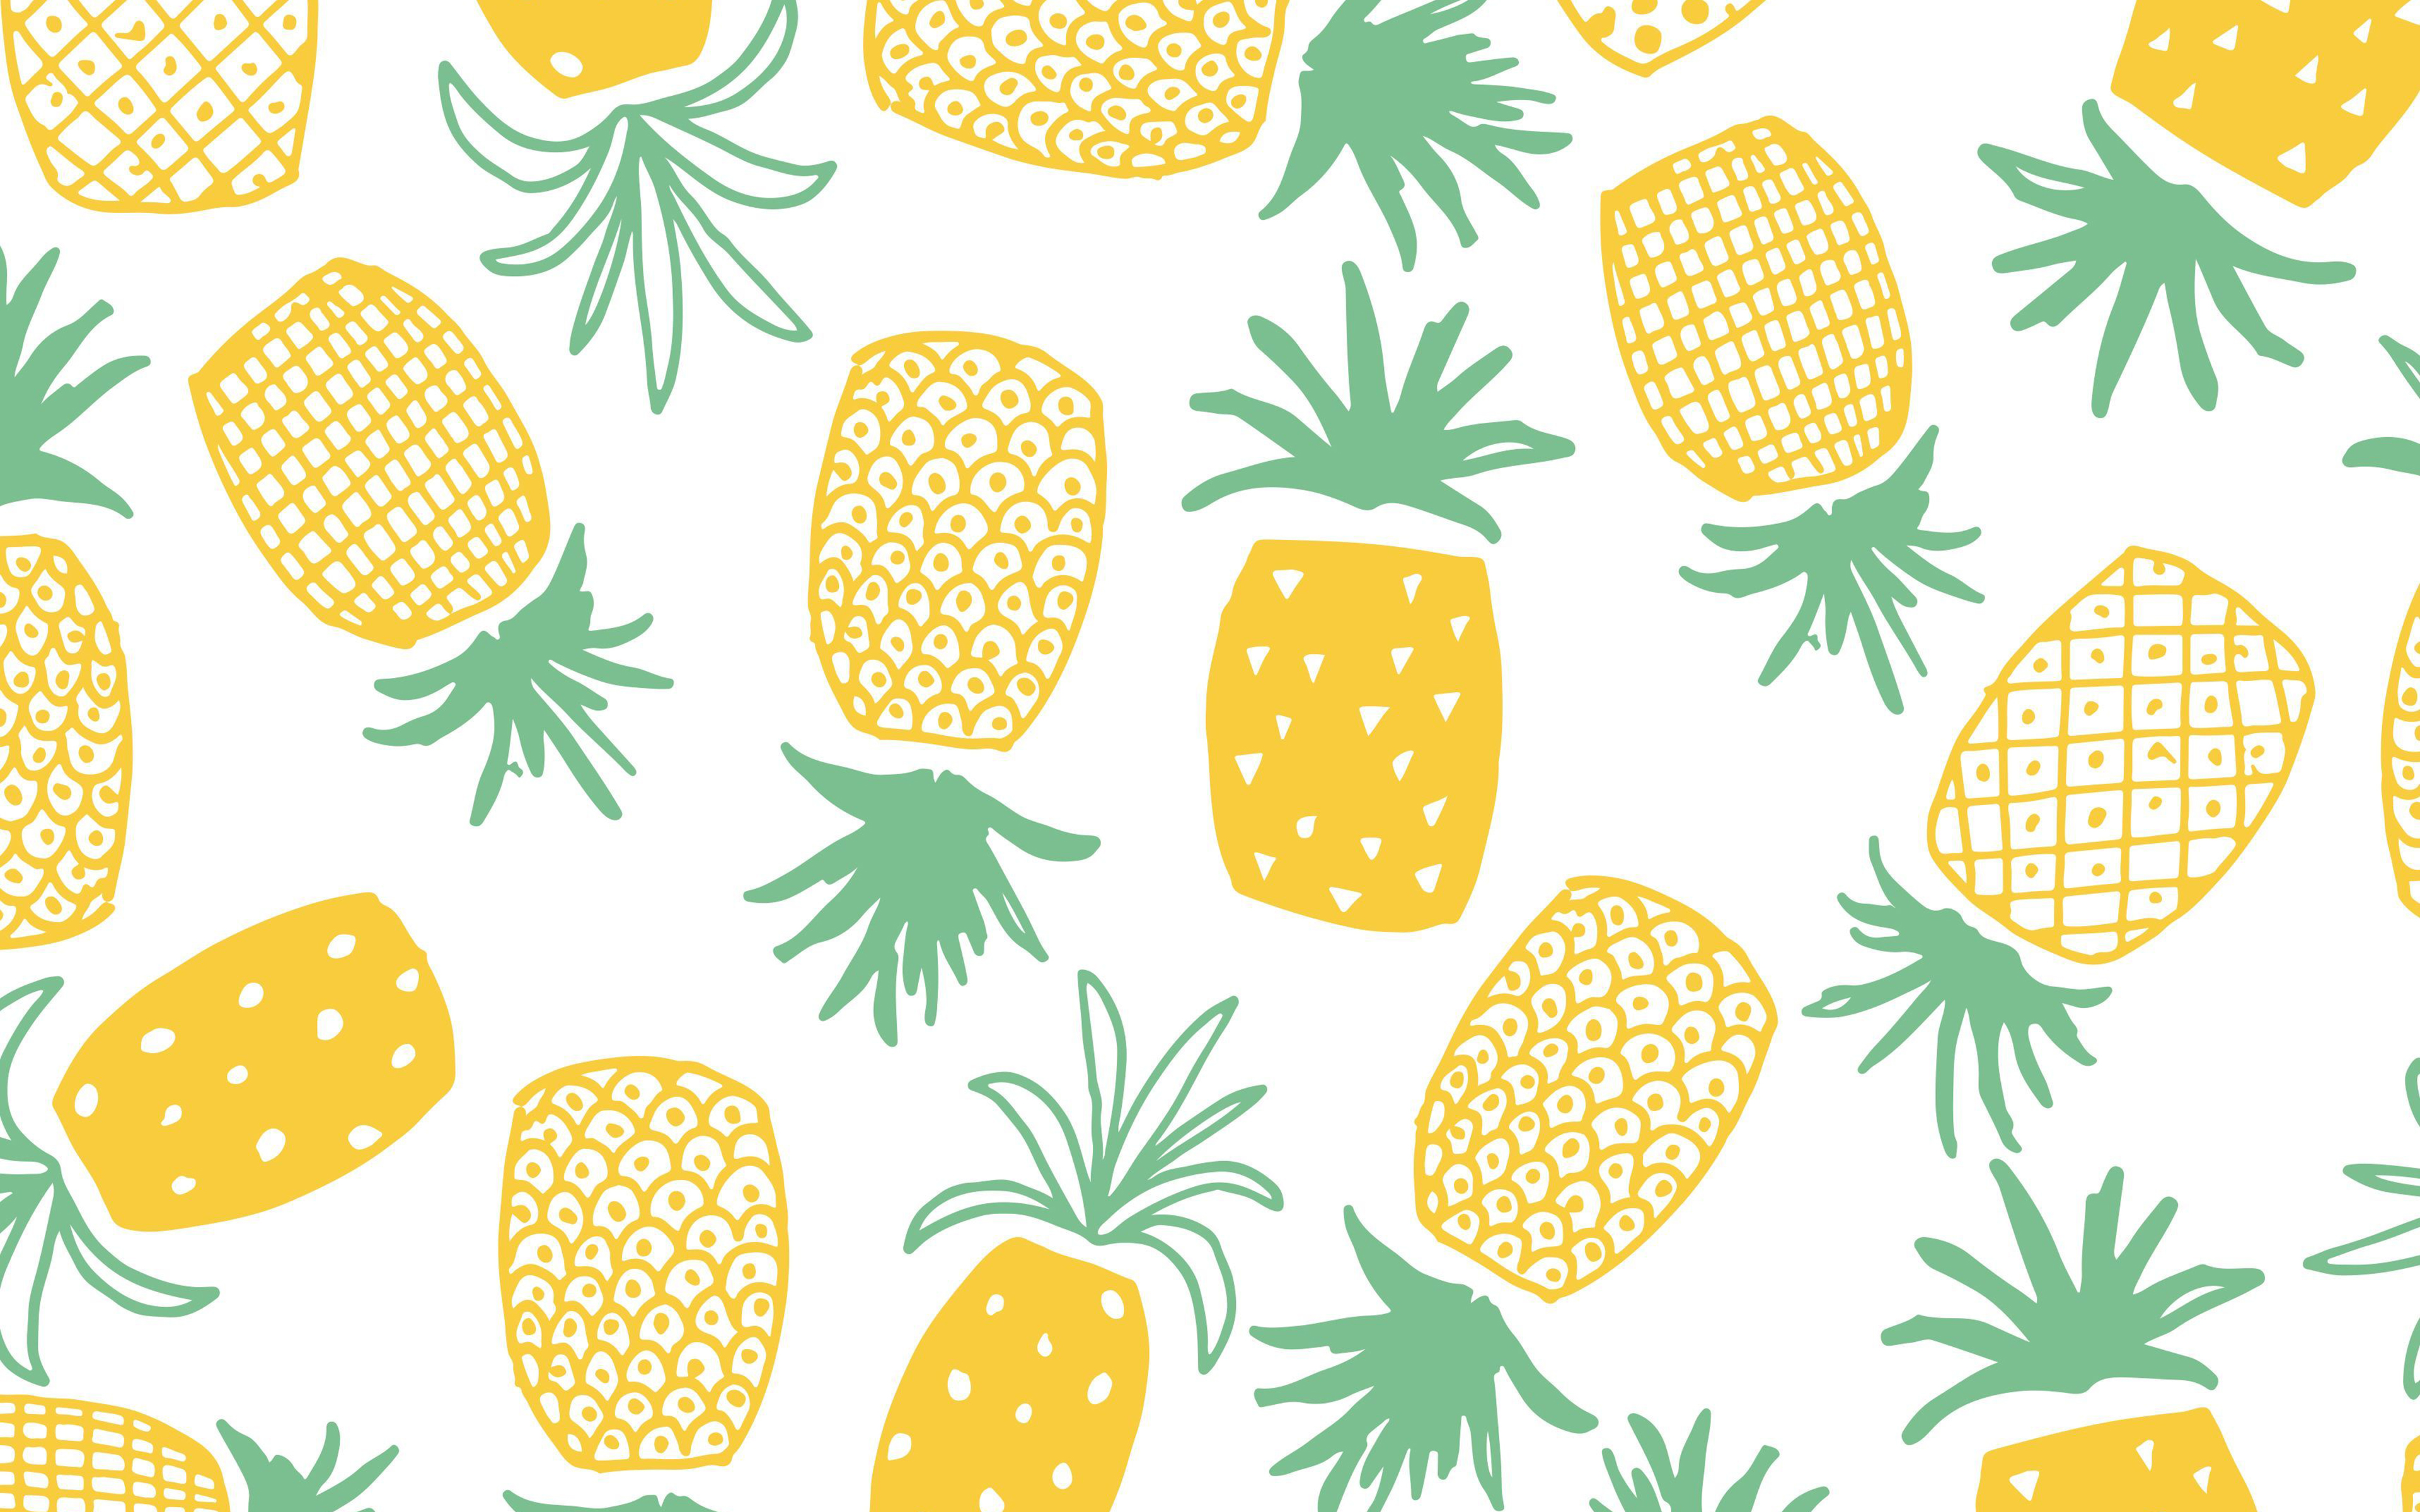 Pineapple Images  Wallpapers  TrumpWallpapers